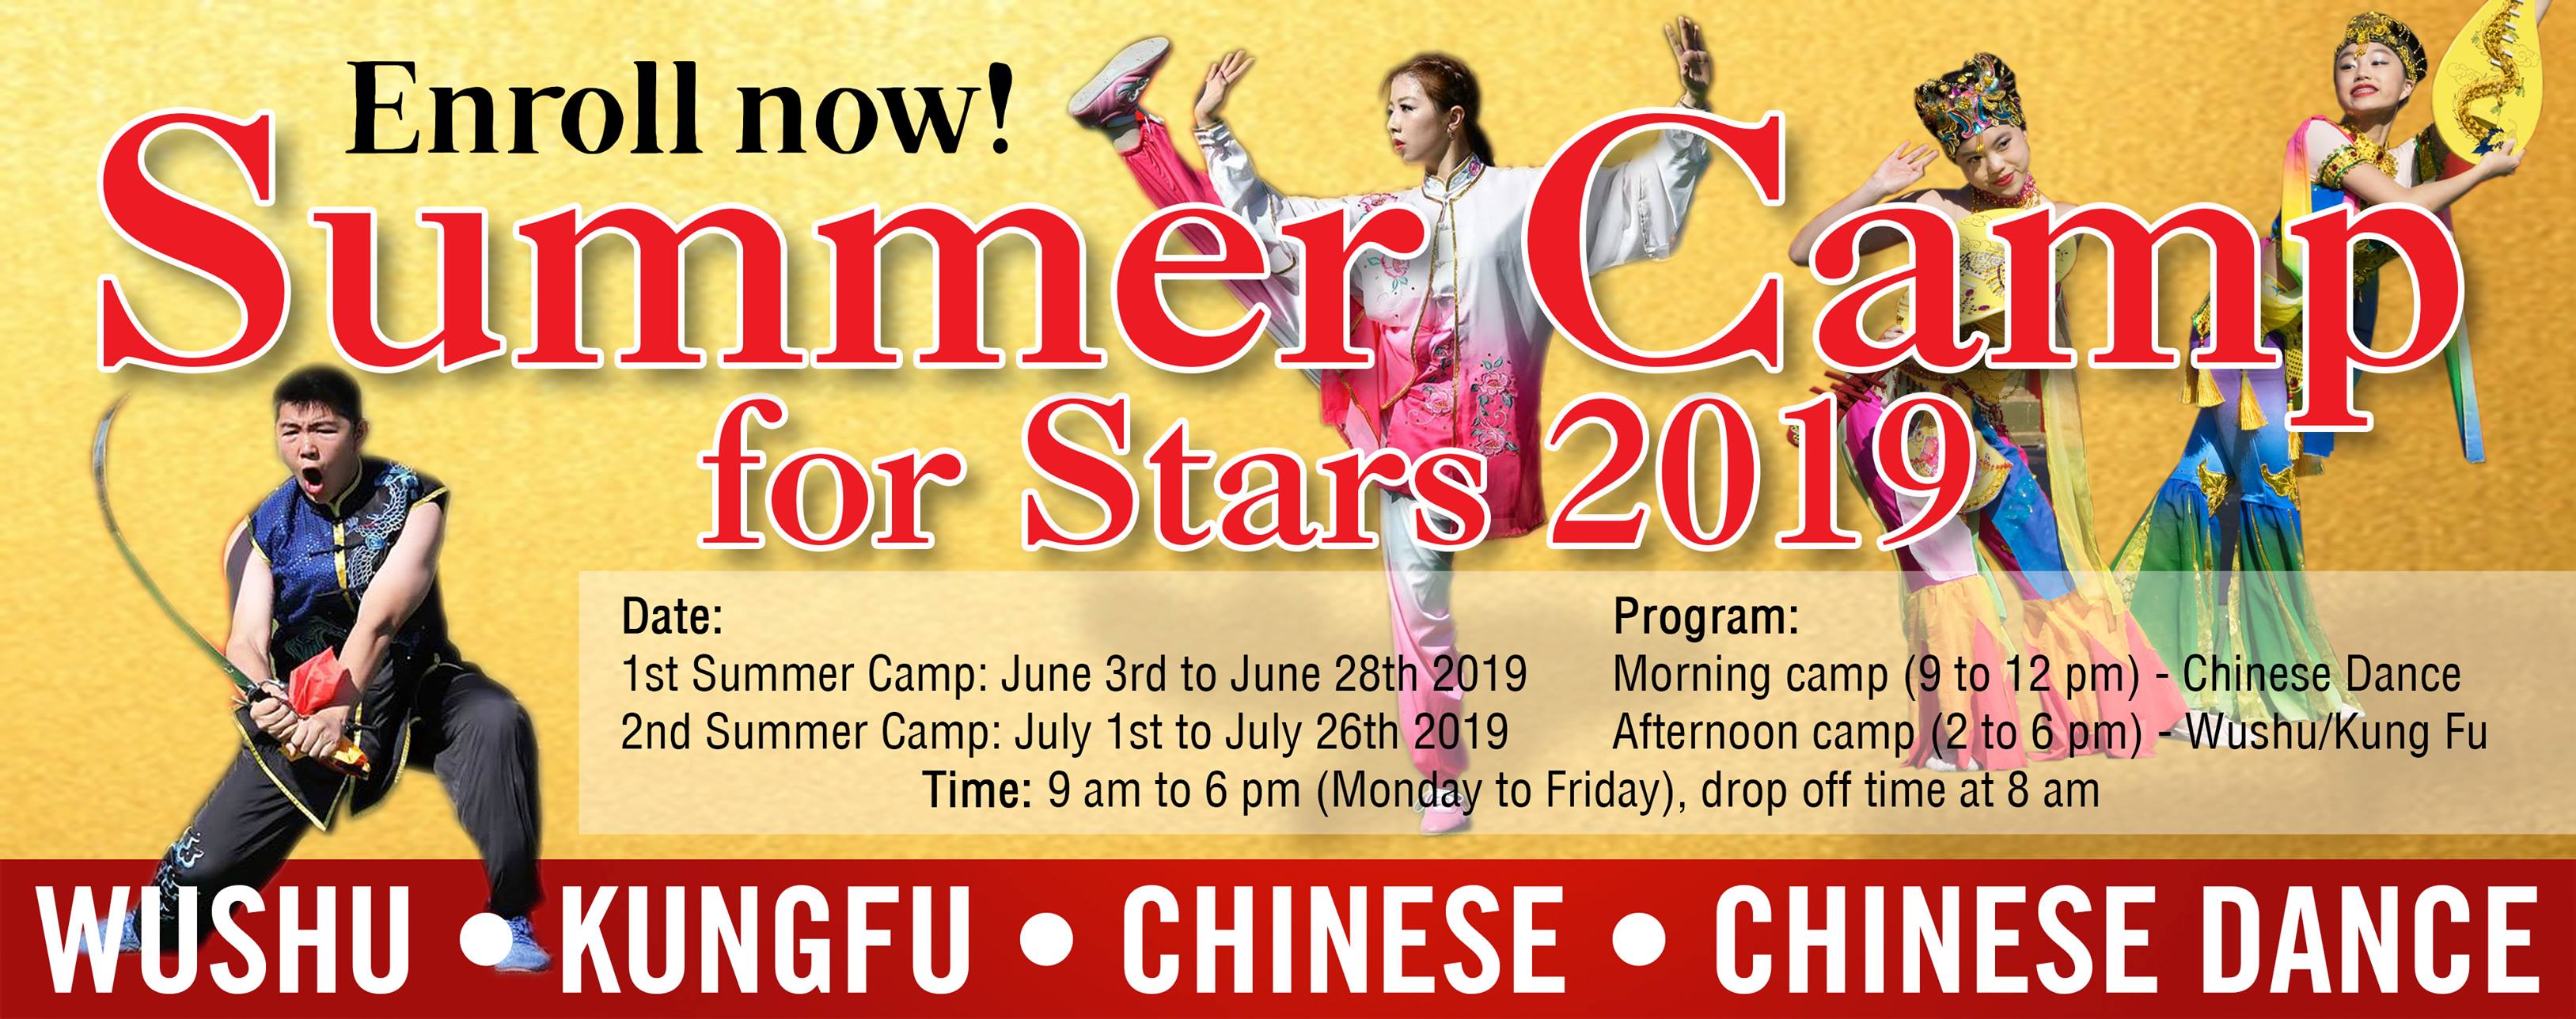 Wushu Academy Summer Camp Ad